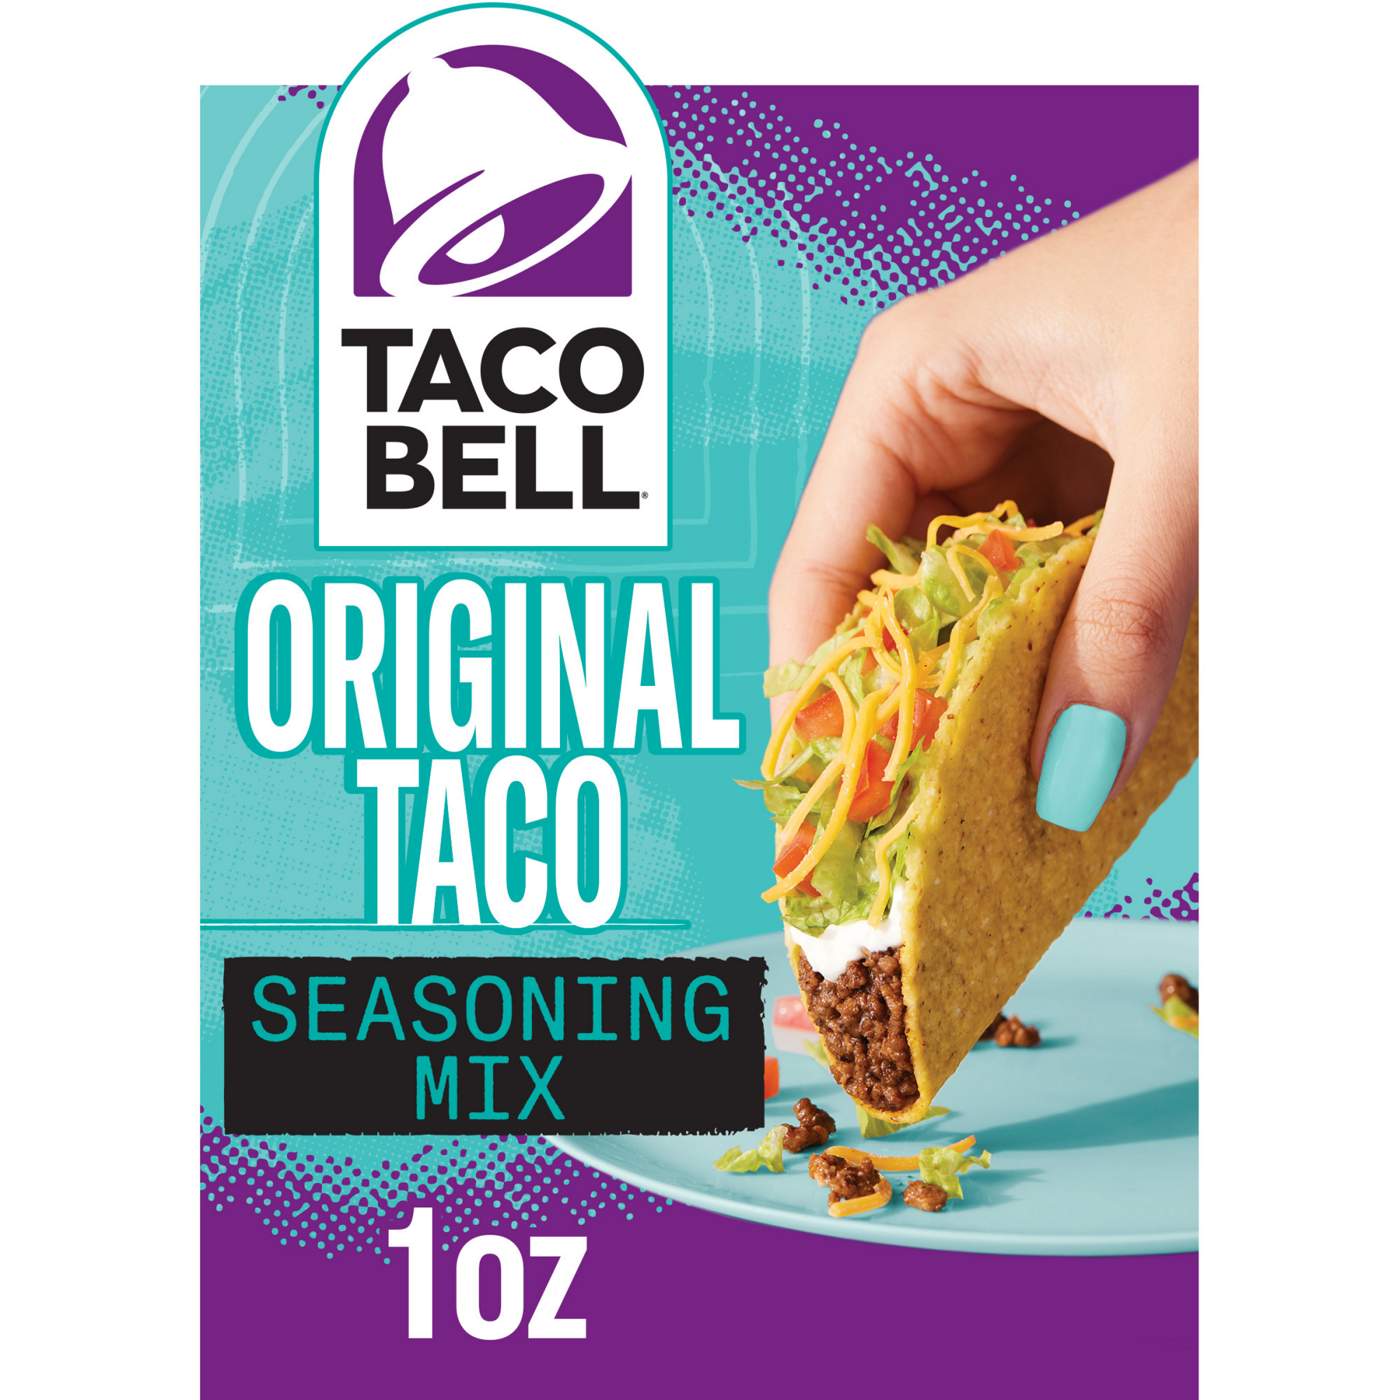 Mccormick Seasoning Mix, Taco, Original - 8.5 oz